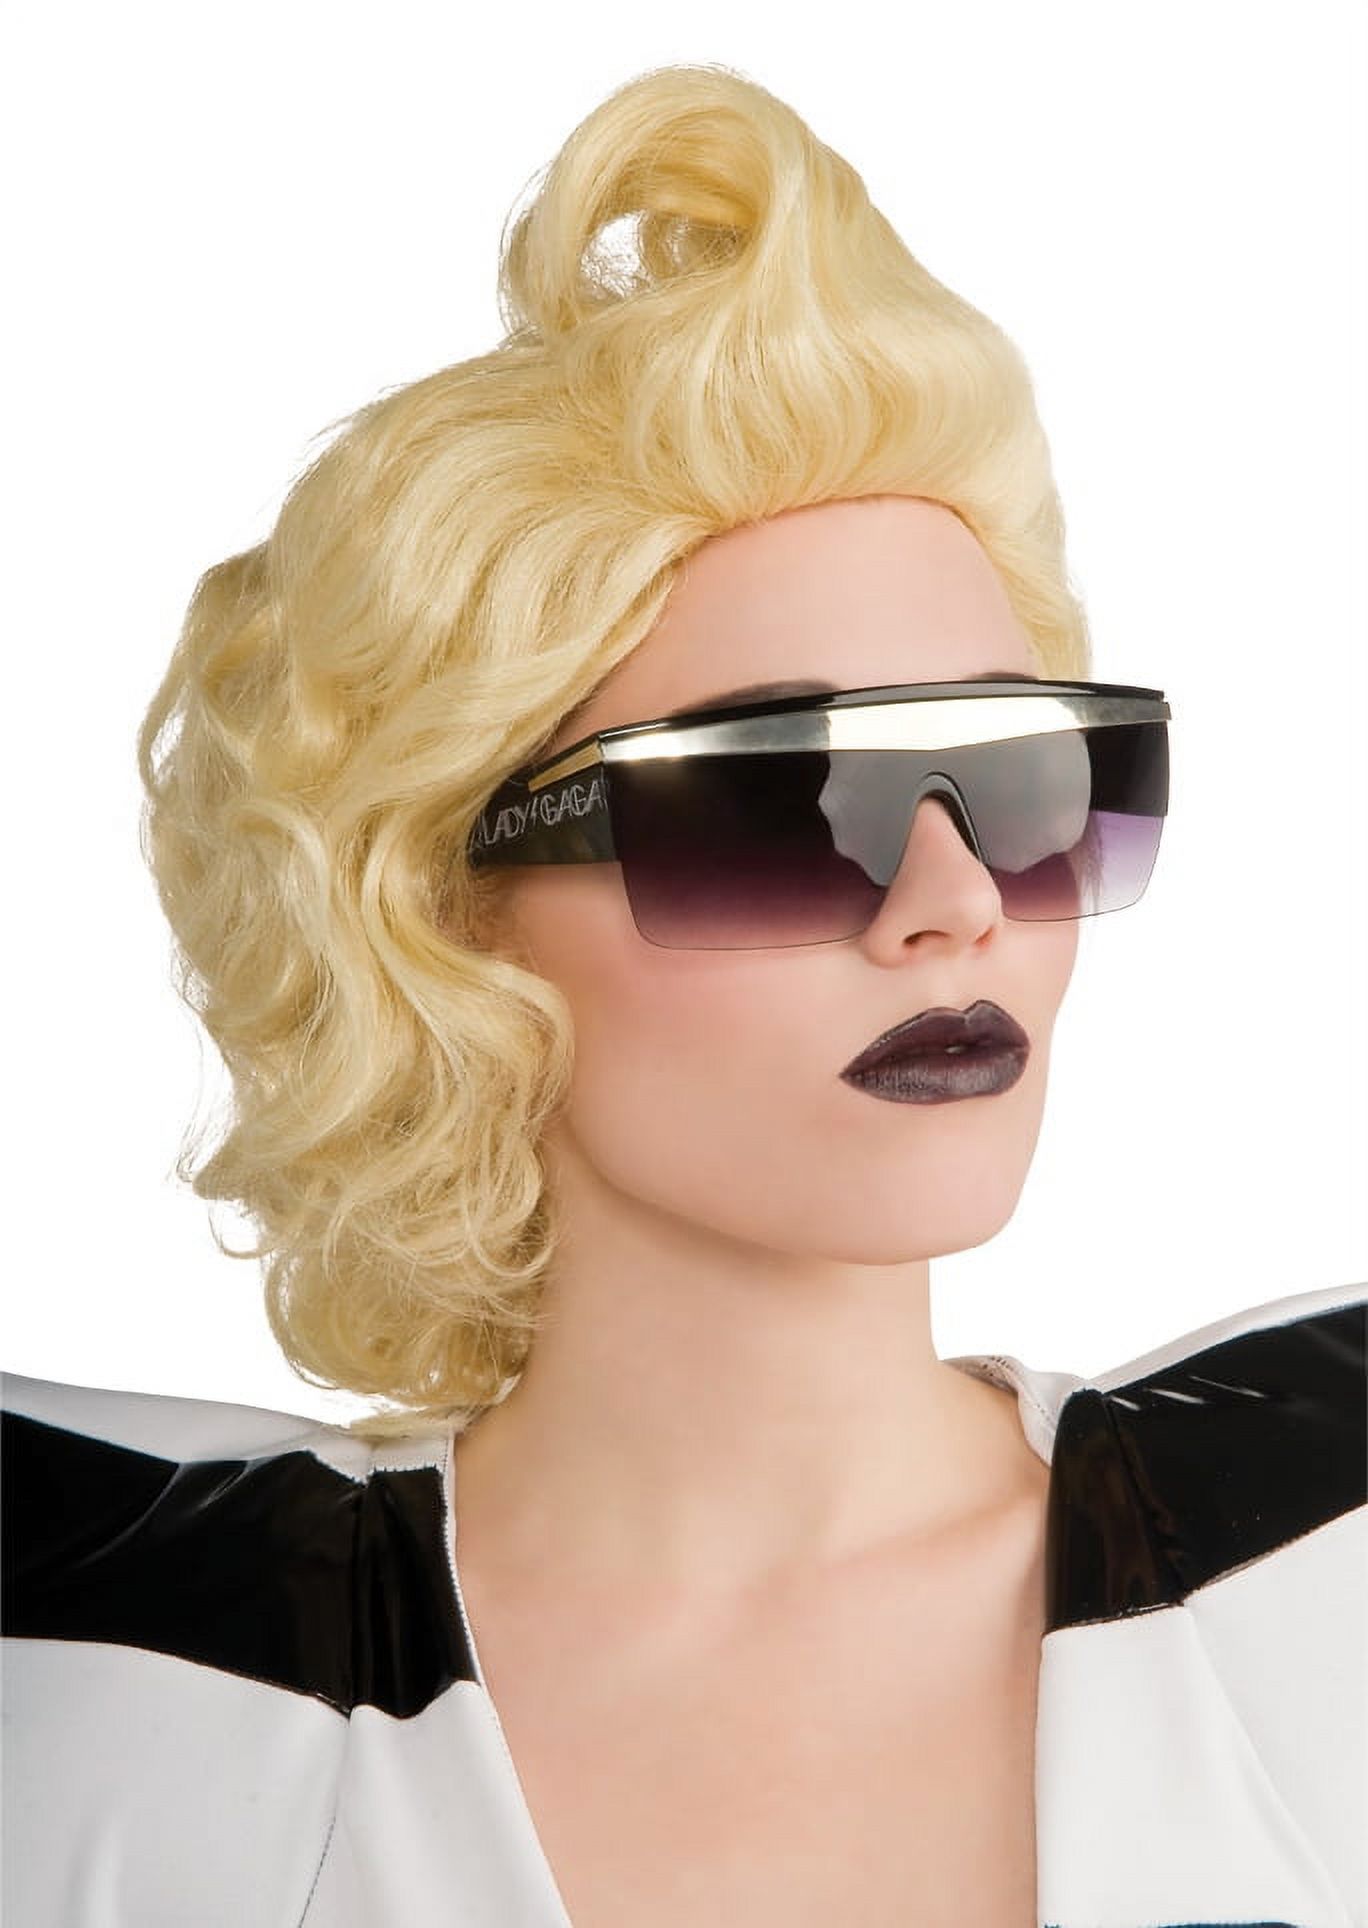 Lady Gaga Men's Lady Gaga Retro Glasses Costume Accessory Black - image 1 of 2